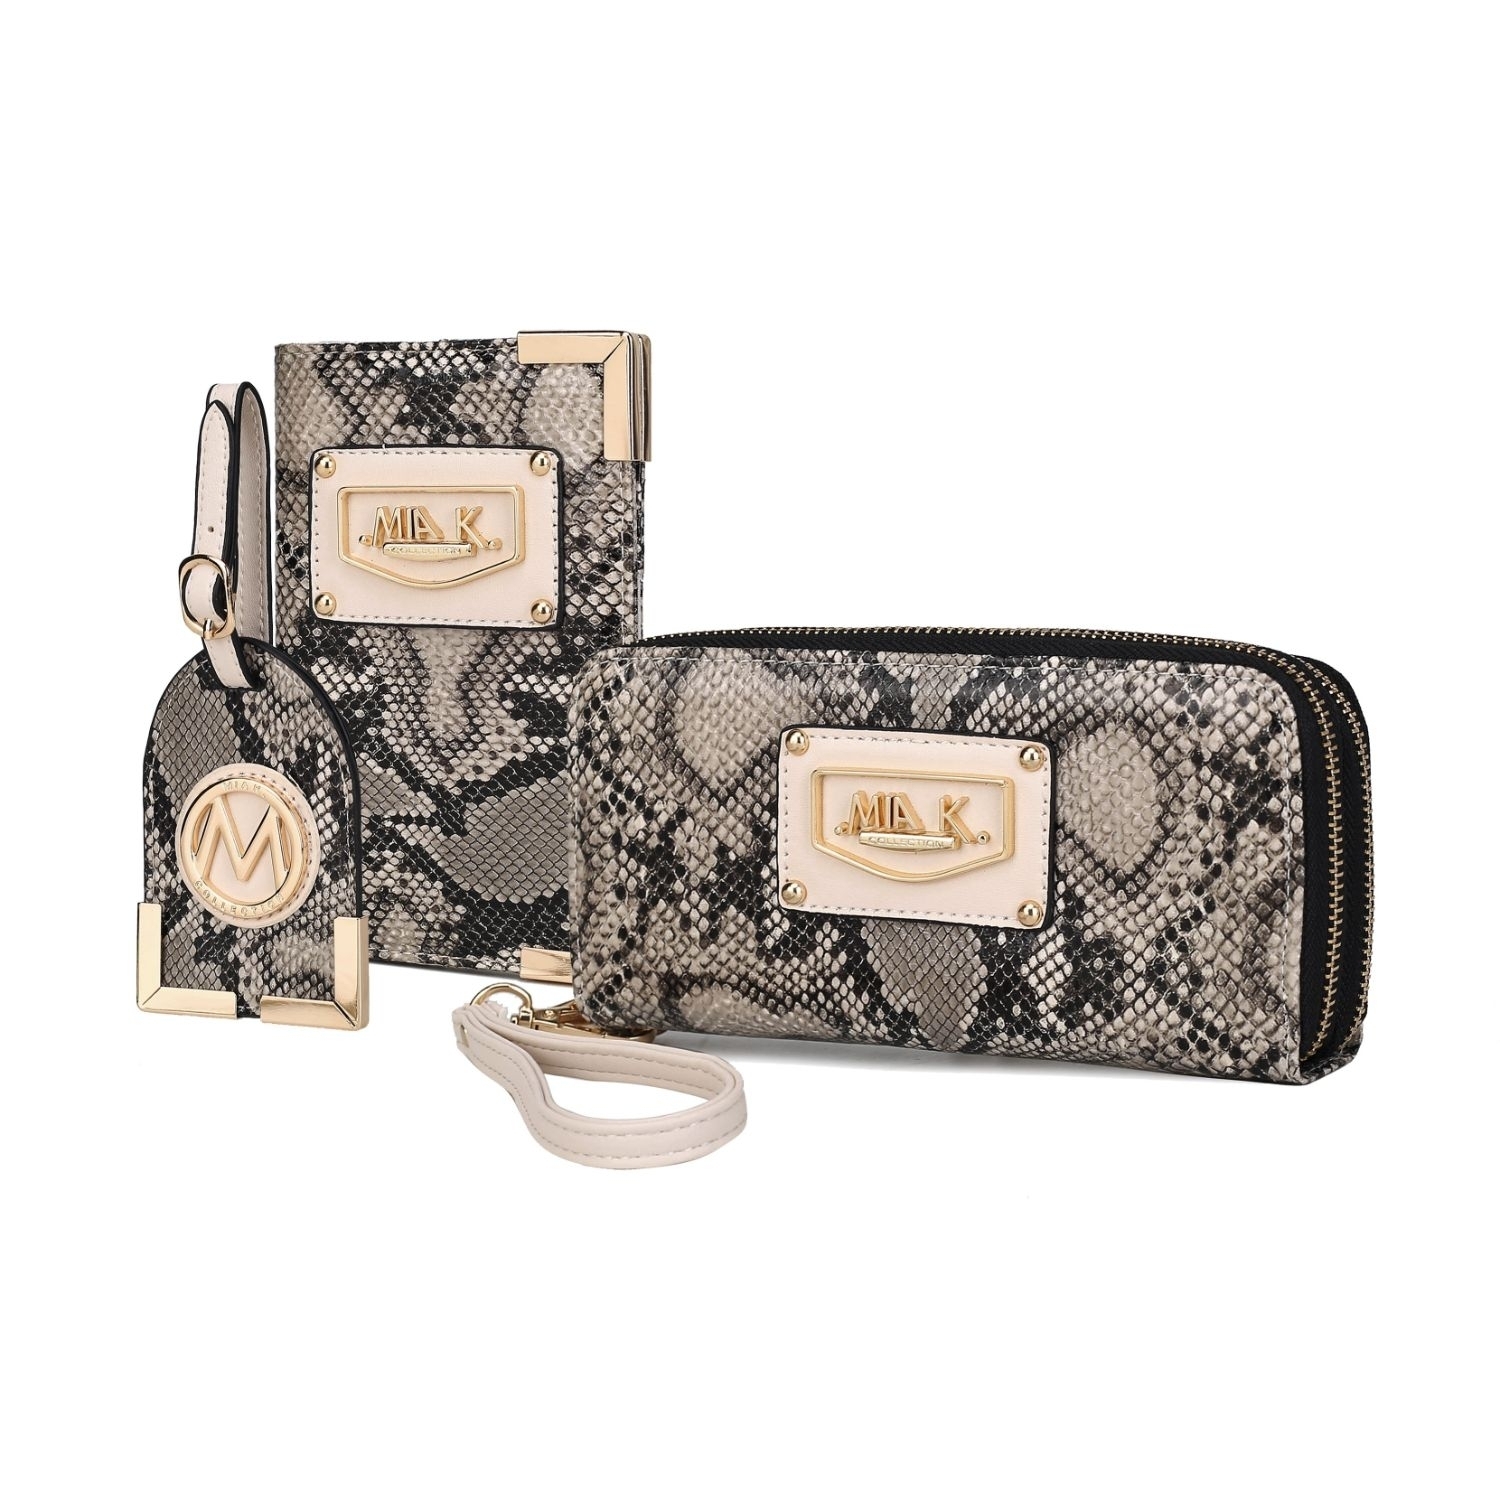 MKF Collection Darla Snake Travel Gift Set Handbag By Mia K 3 Pieces - Black